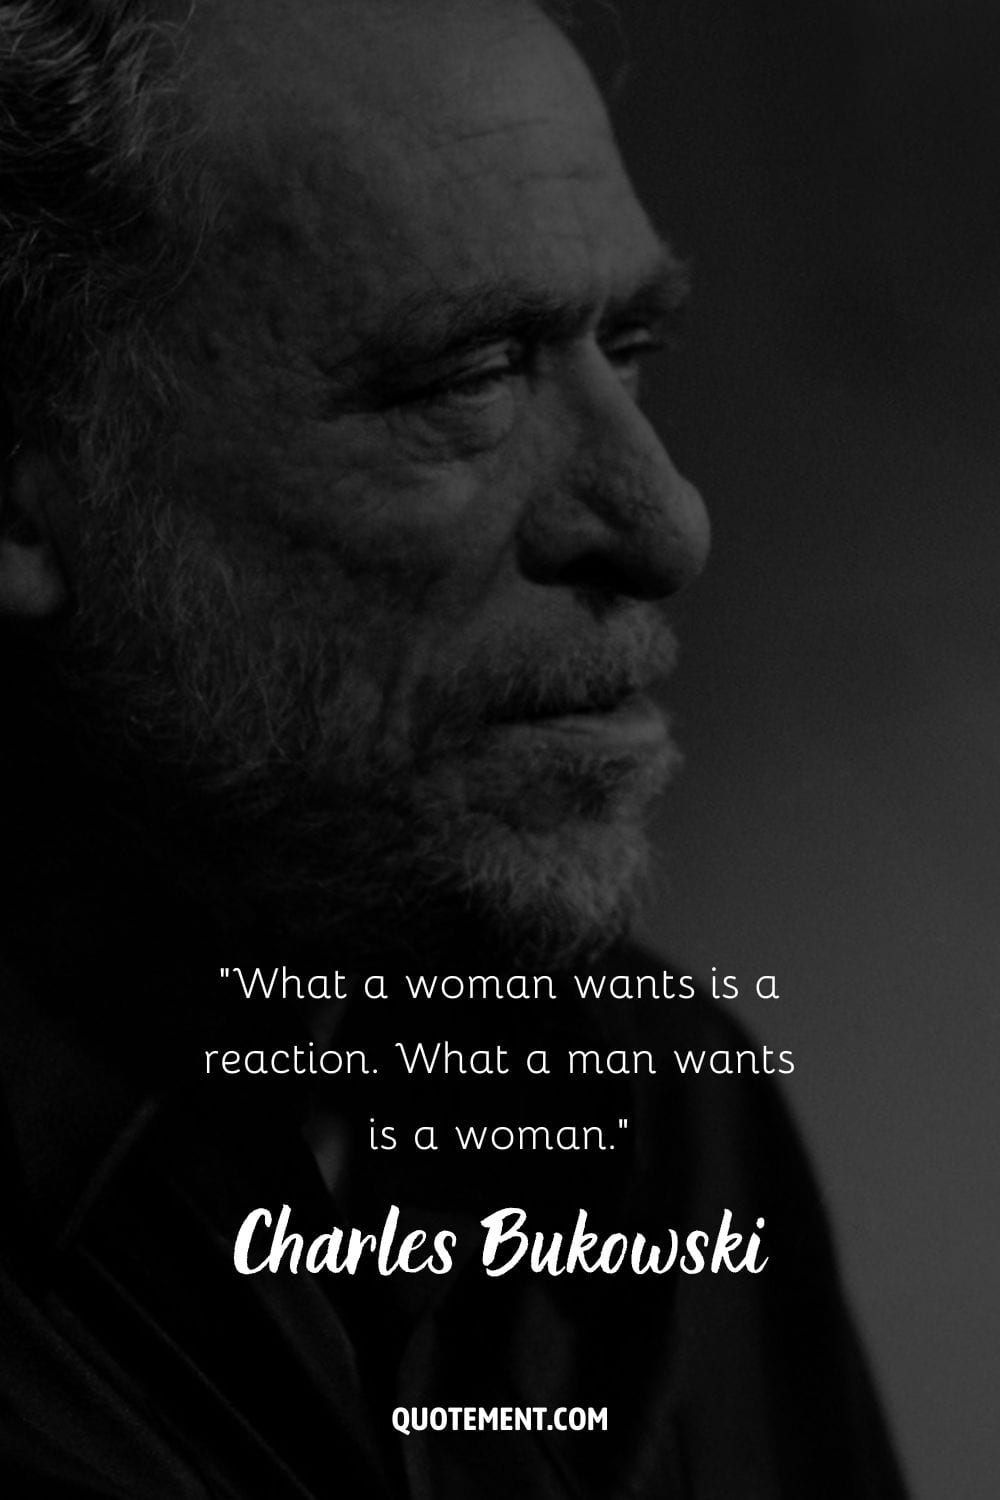 focused expression on Charles Bukowski's face